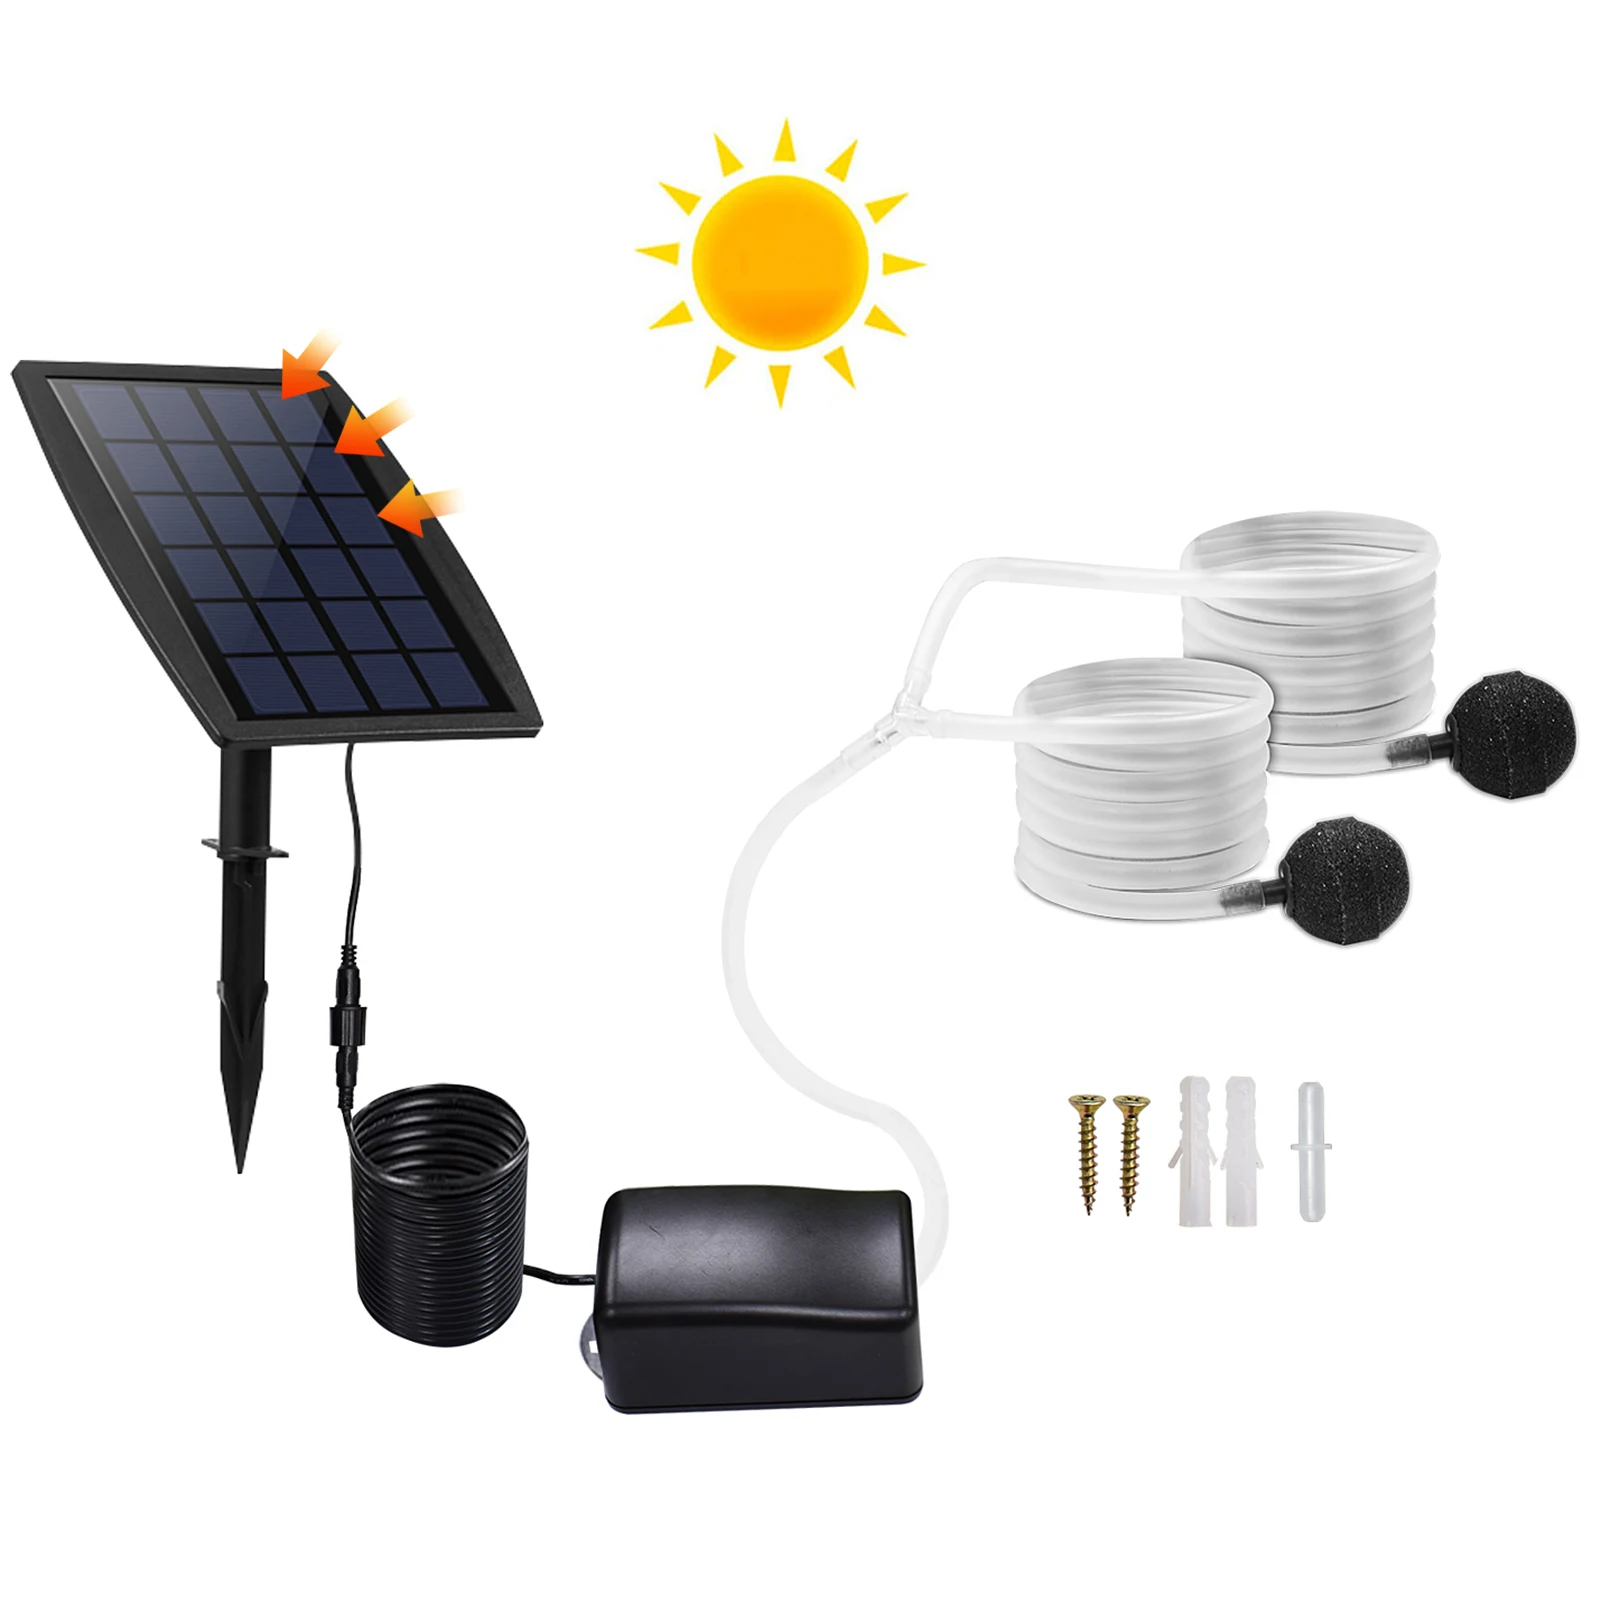 Pond Aerator Solar Air Pump Solar Pond Pump With 3 Working Modes Solar Panel Kit For Pond Aquaculture Hydroponics Bubbleponics